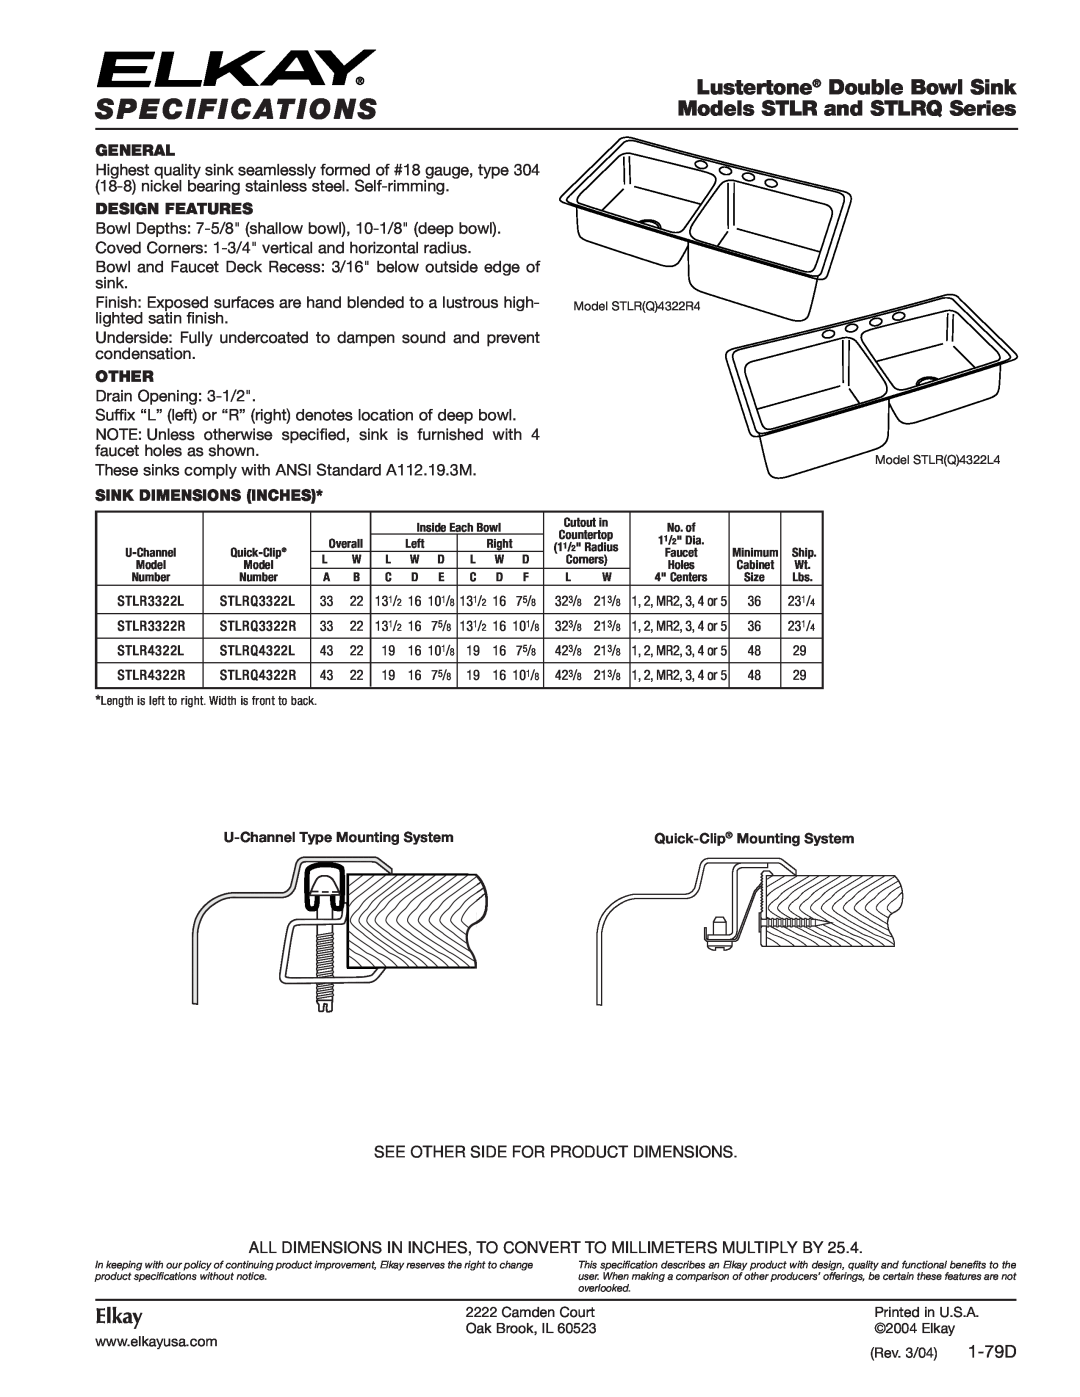 Elkay specifications Specifications, Lustertone Double Bowl Sink, Models STLR and STLRQ Series, Elkay, 1-79D, General 